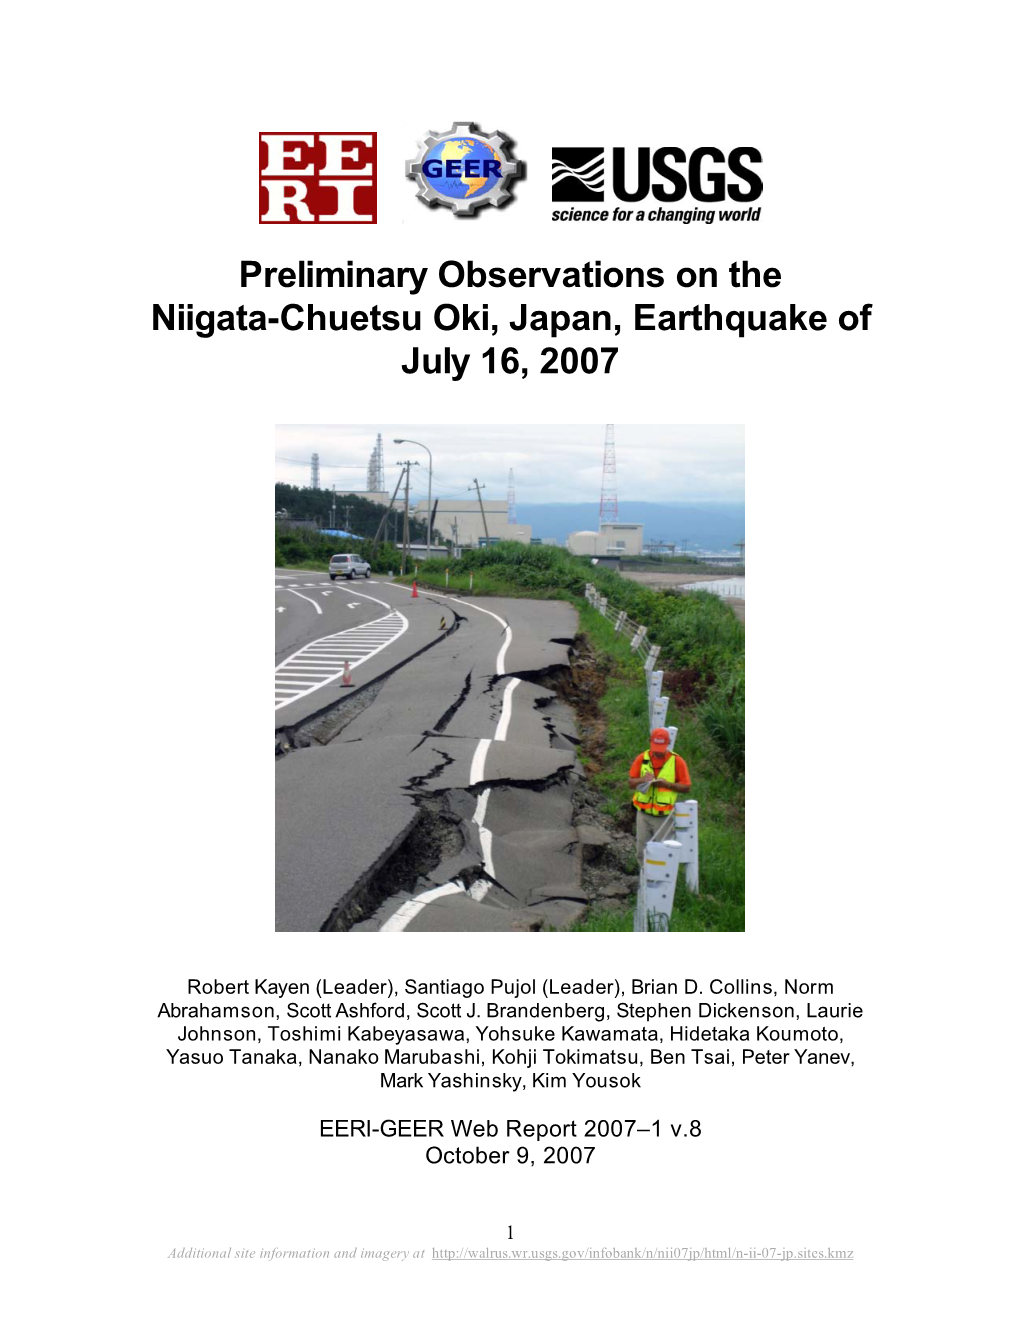 Preliminary Observations on the Niigata-Chuetsu Oki, Japan, Earthquake of July 16, 2007